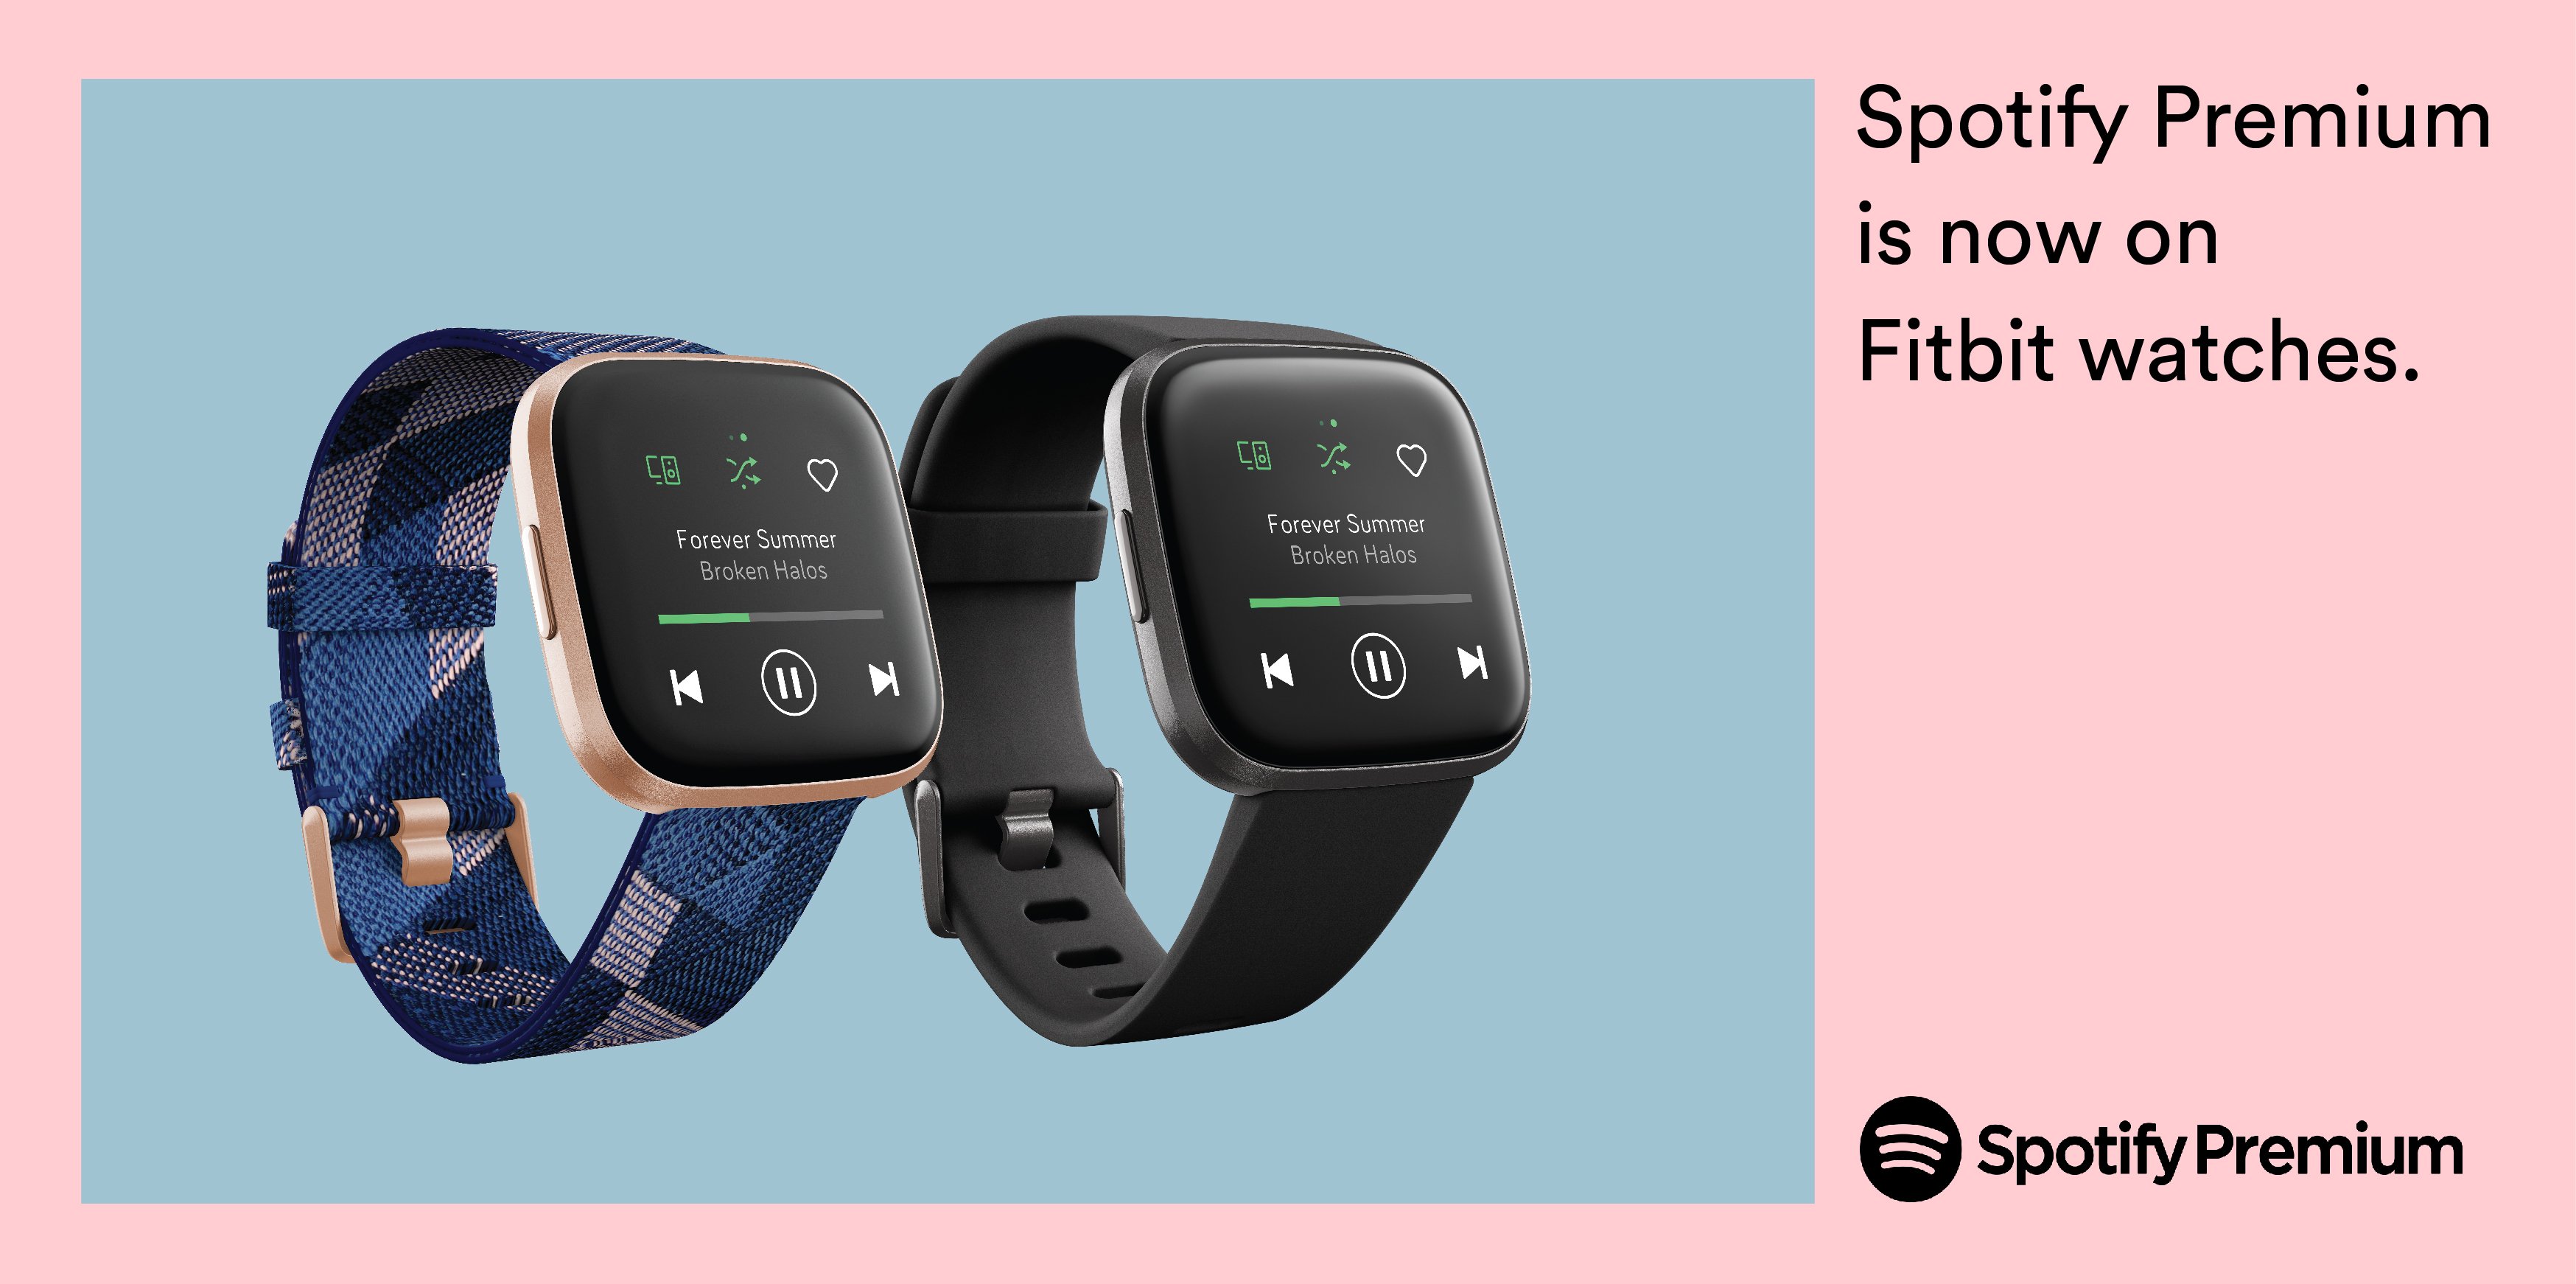 binde indsats Bi Spotify on Twitter: "Getting in shape never sounded so good. Spotify  Premium is now on @Fitbit 🏃‍♀️🏃‍♂️ https://t.co/oBYMw9FnAE #FitbitVersa2  https://t.co/bssoeCsODE" / Twitter